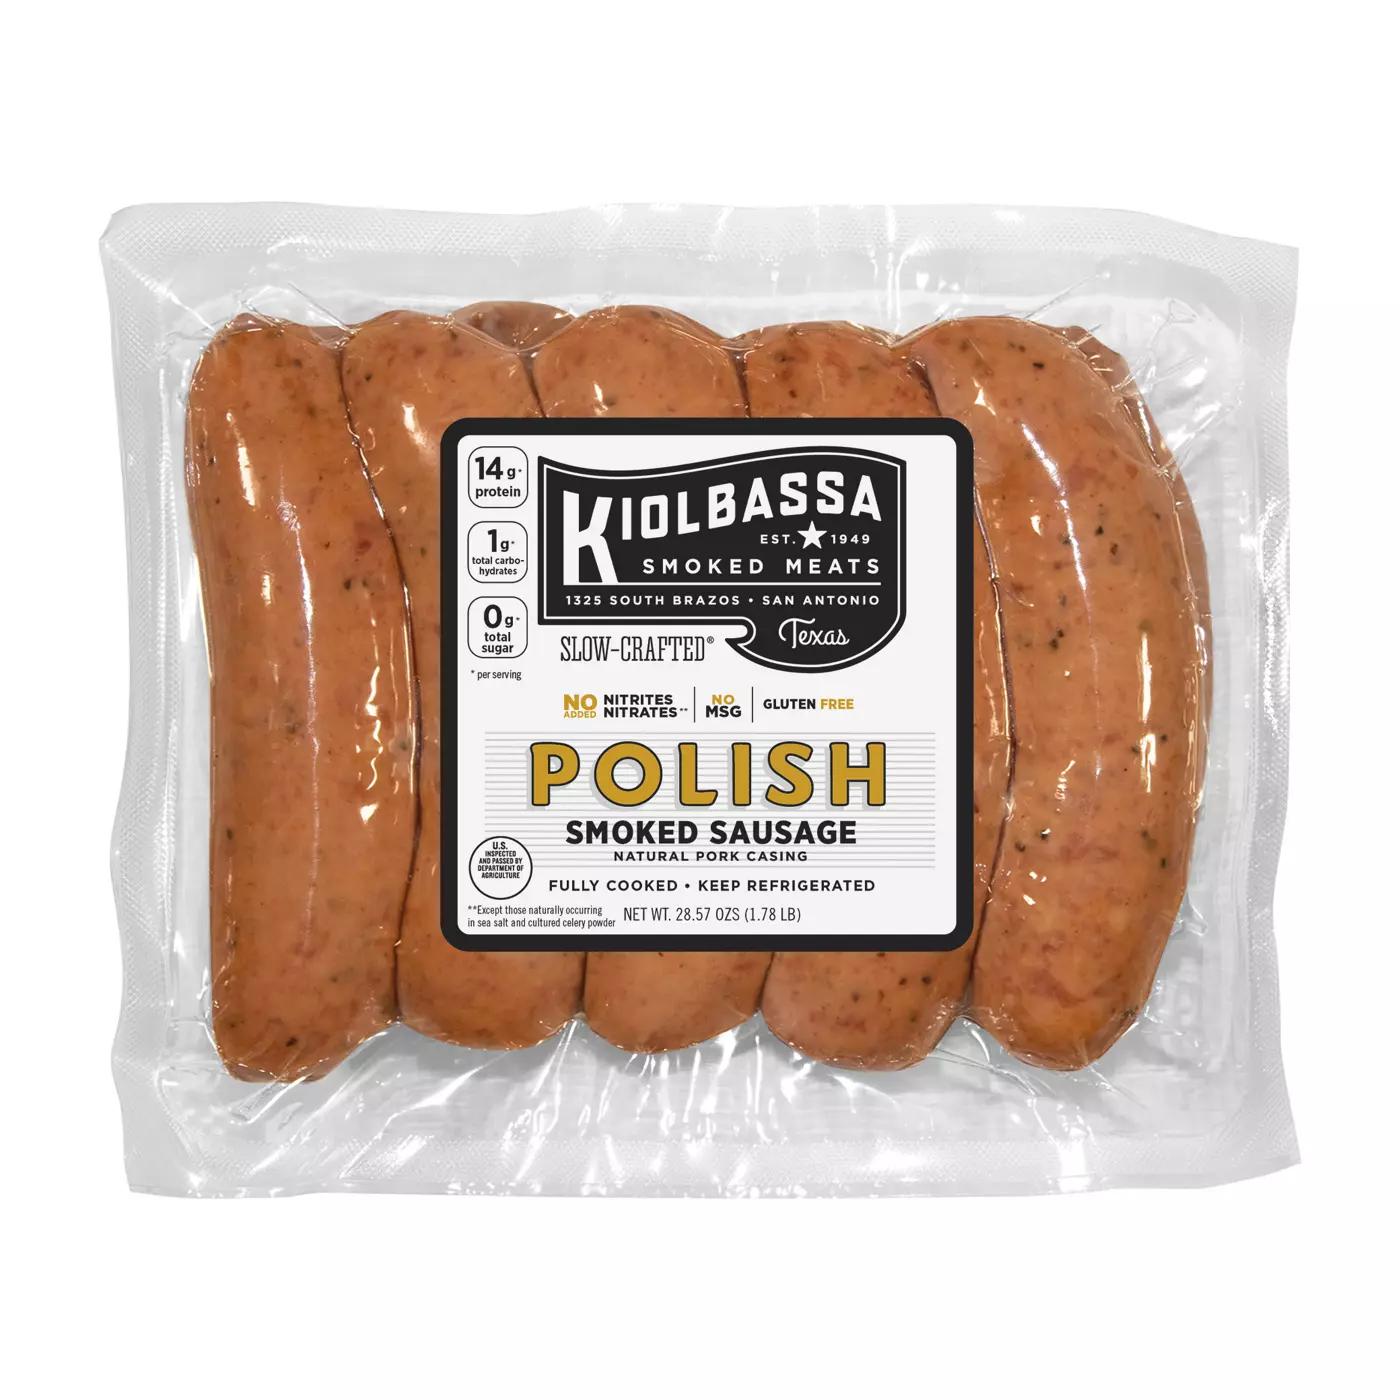 kiolbassa polish smoked sausage - What are the ingredients in Kiolbassa sausage